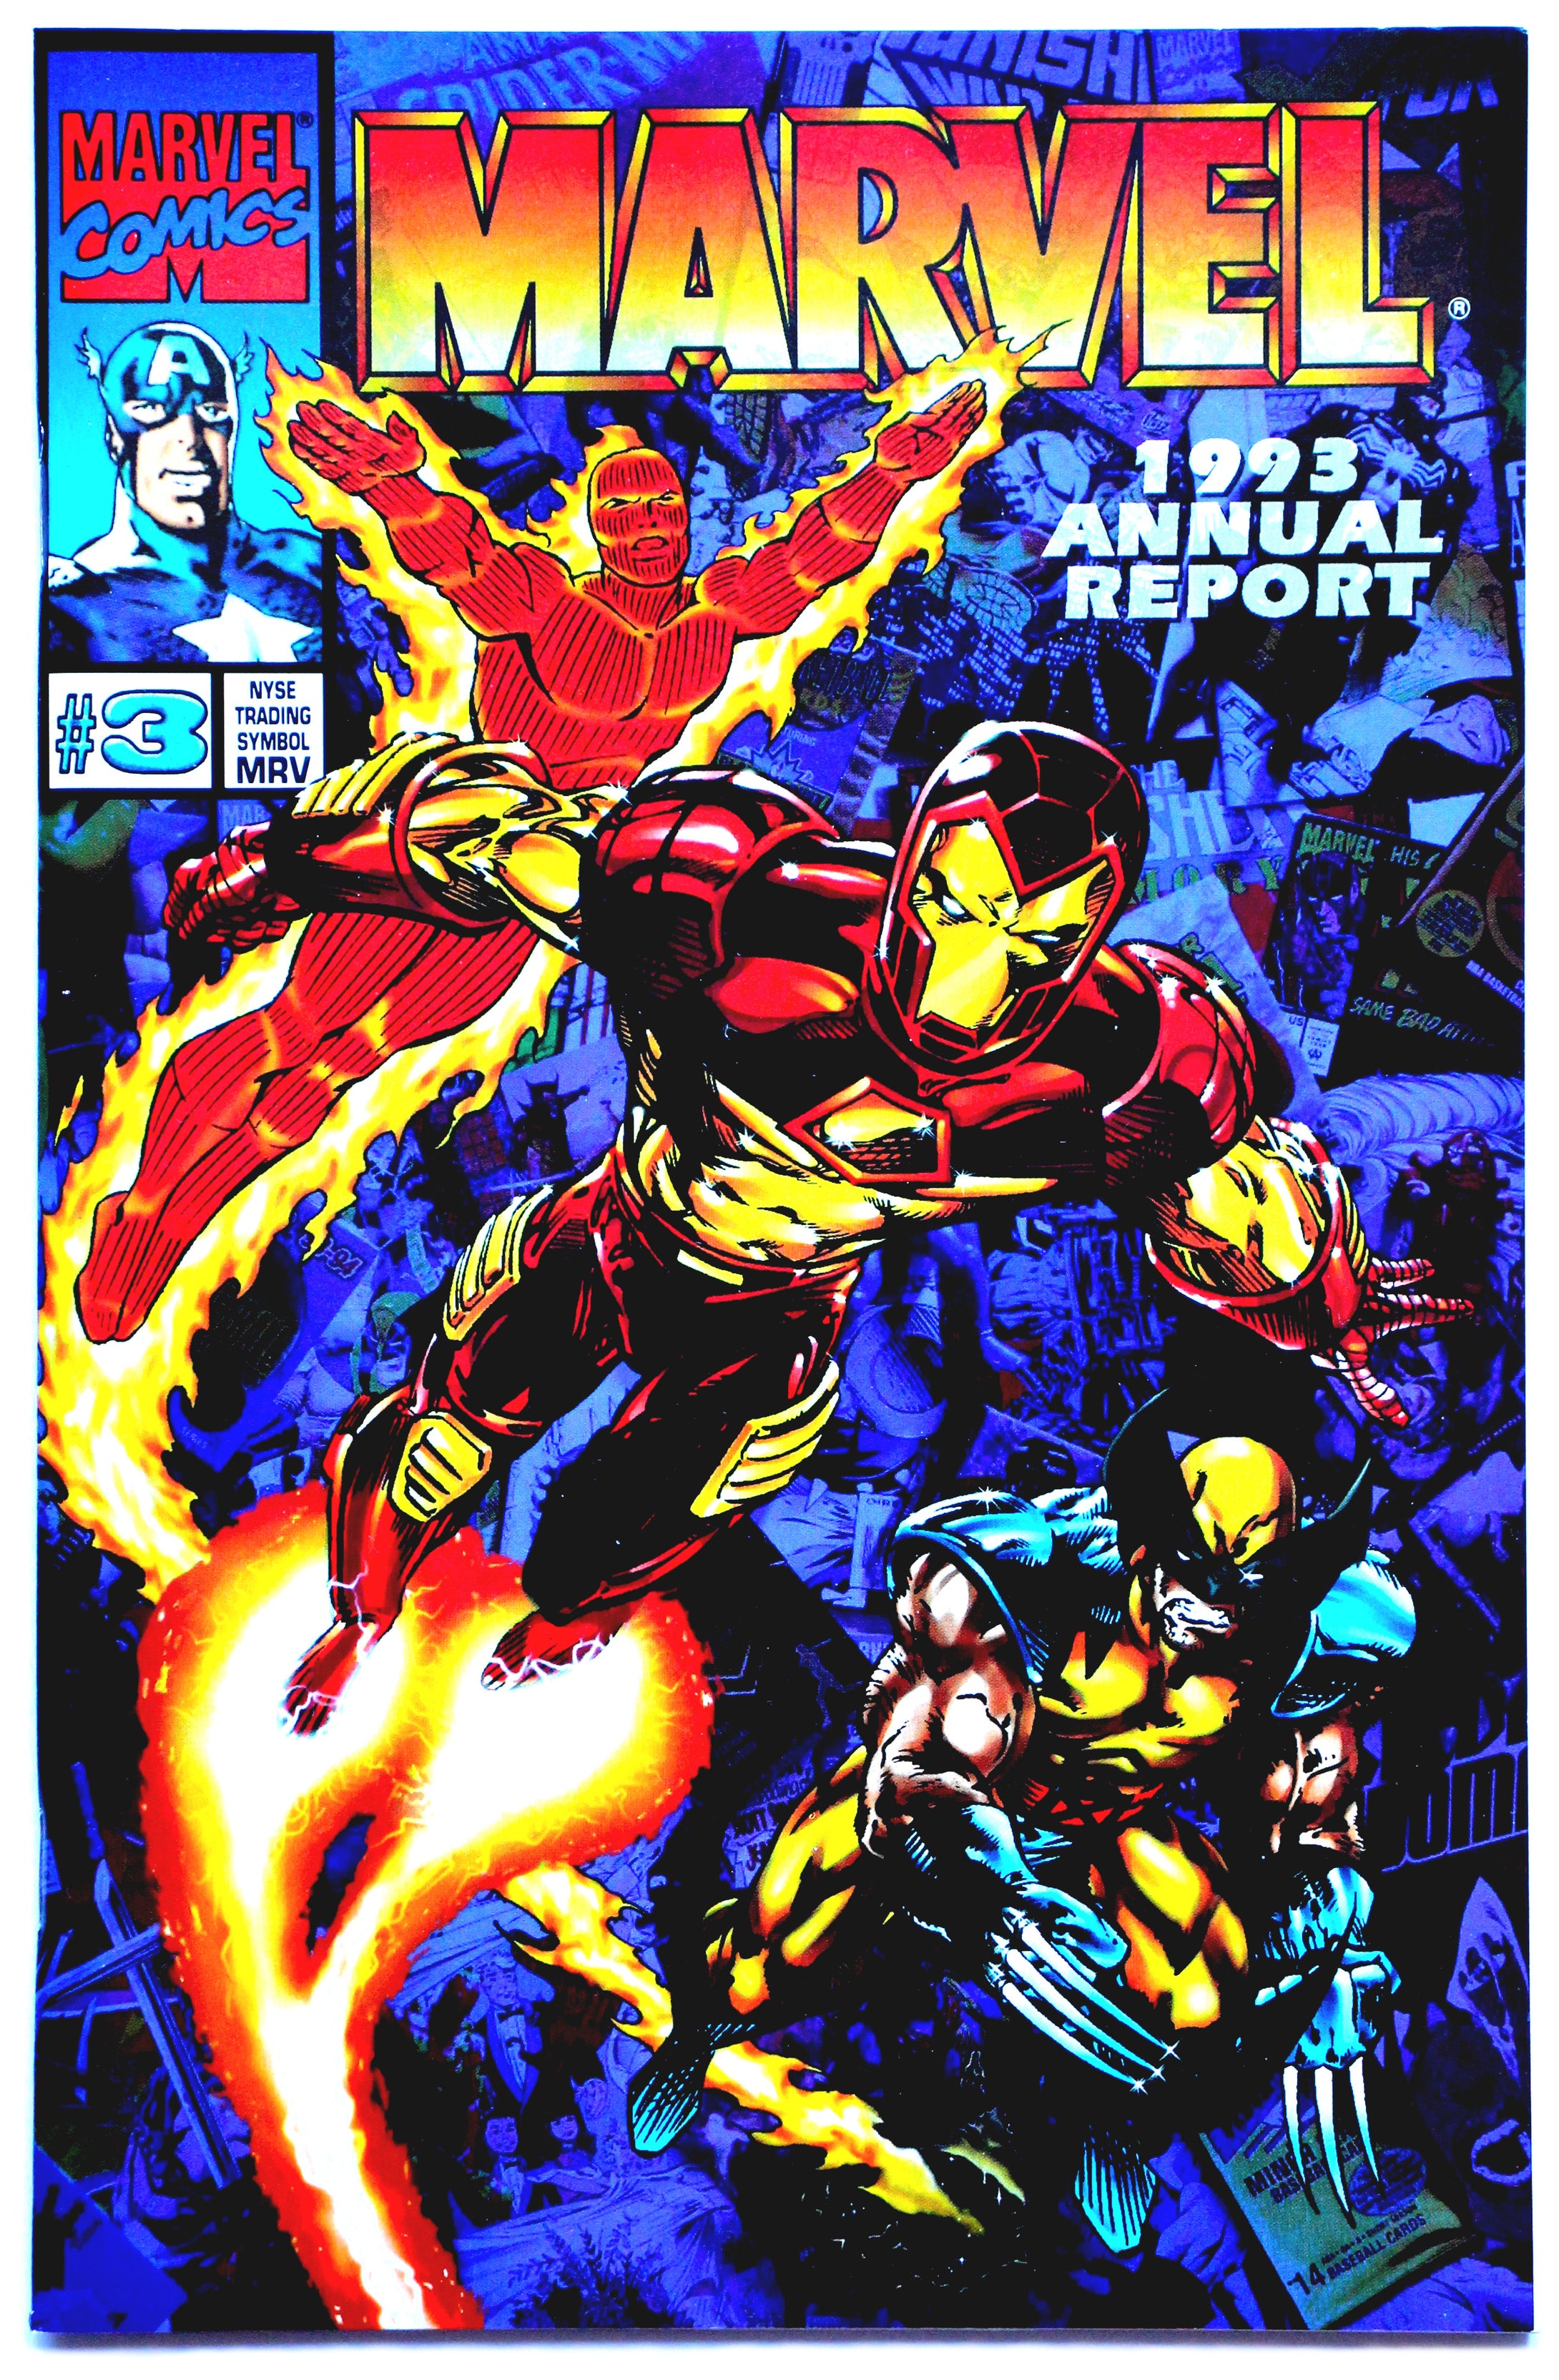 1993 Marvel Comics Annual Report #3 - NYSE - MRV - Wall Street Treasures